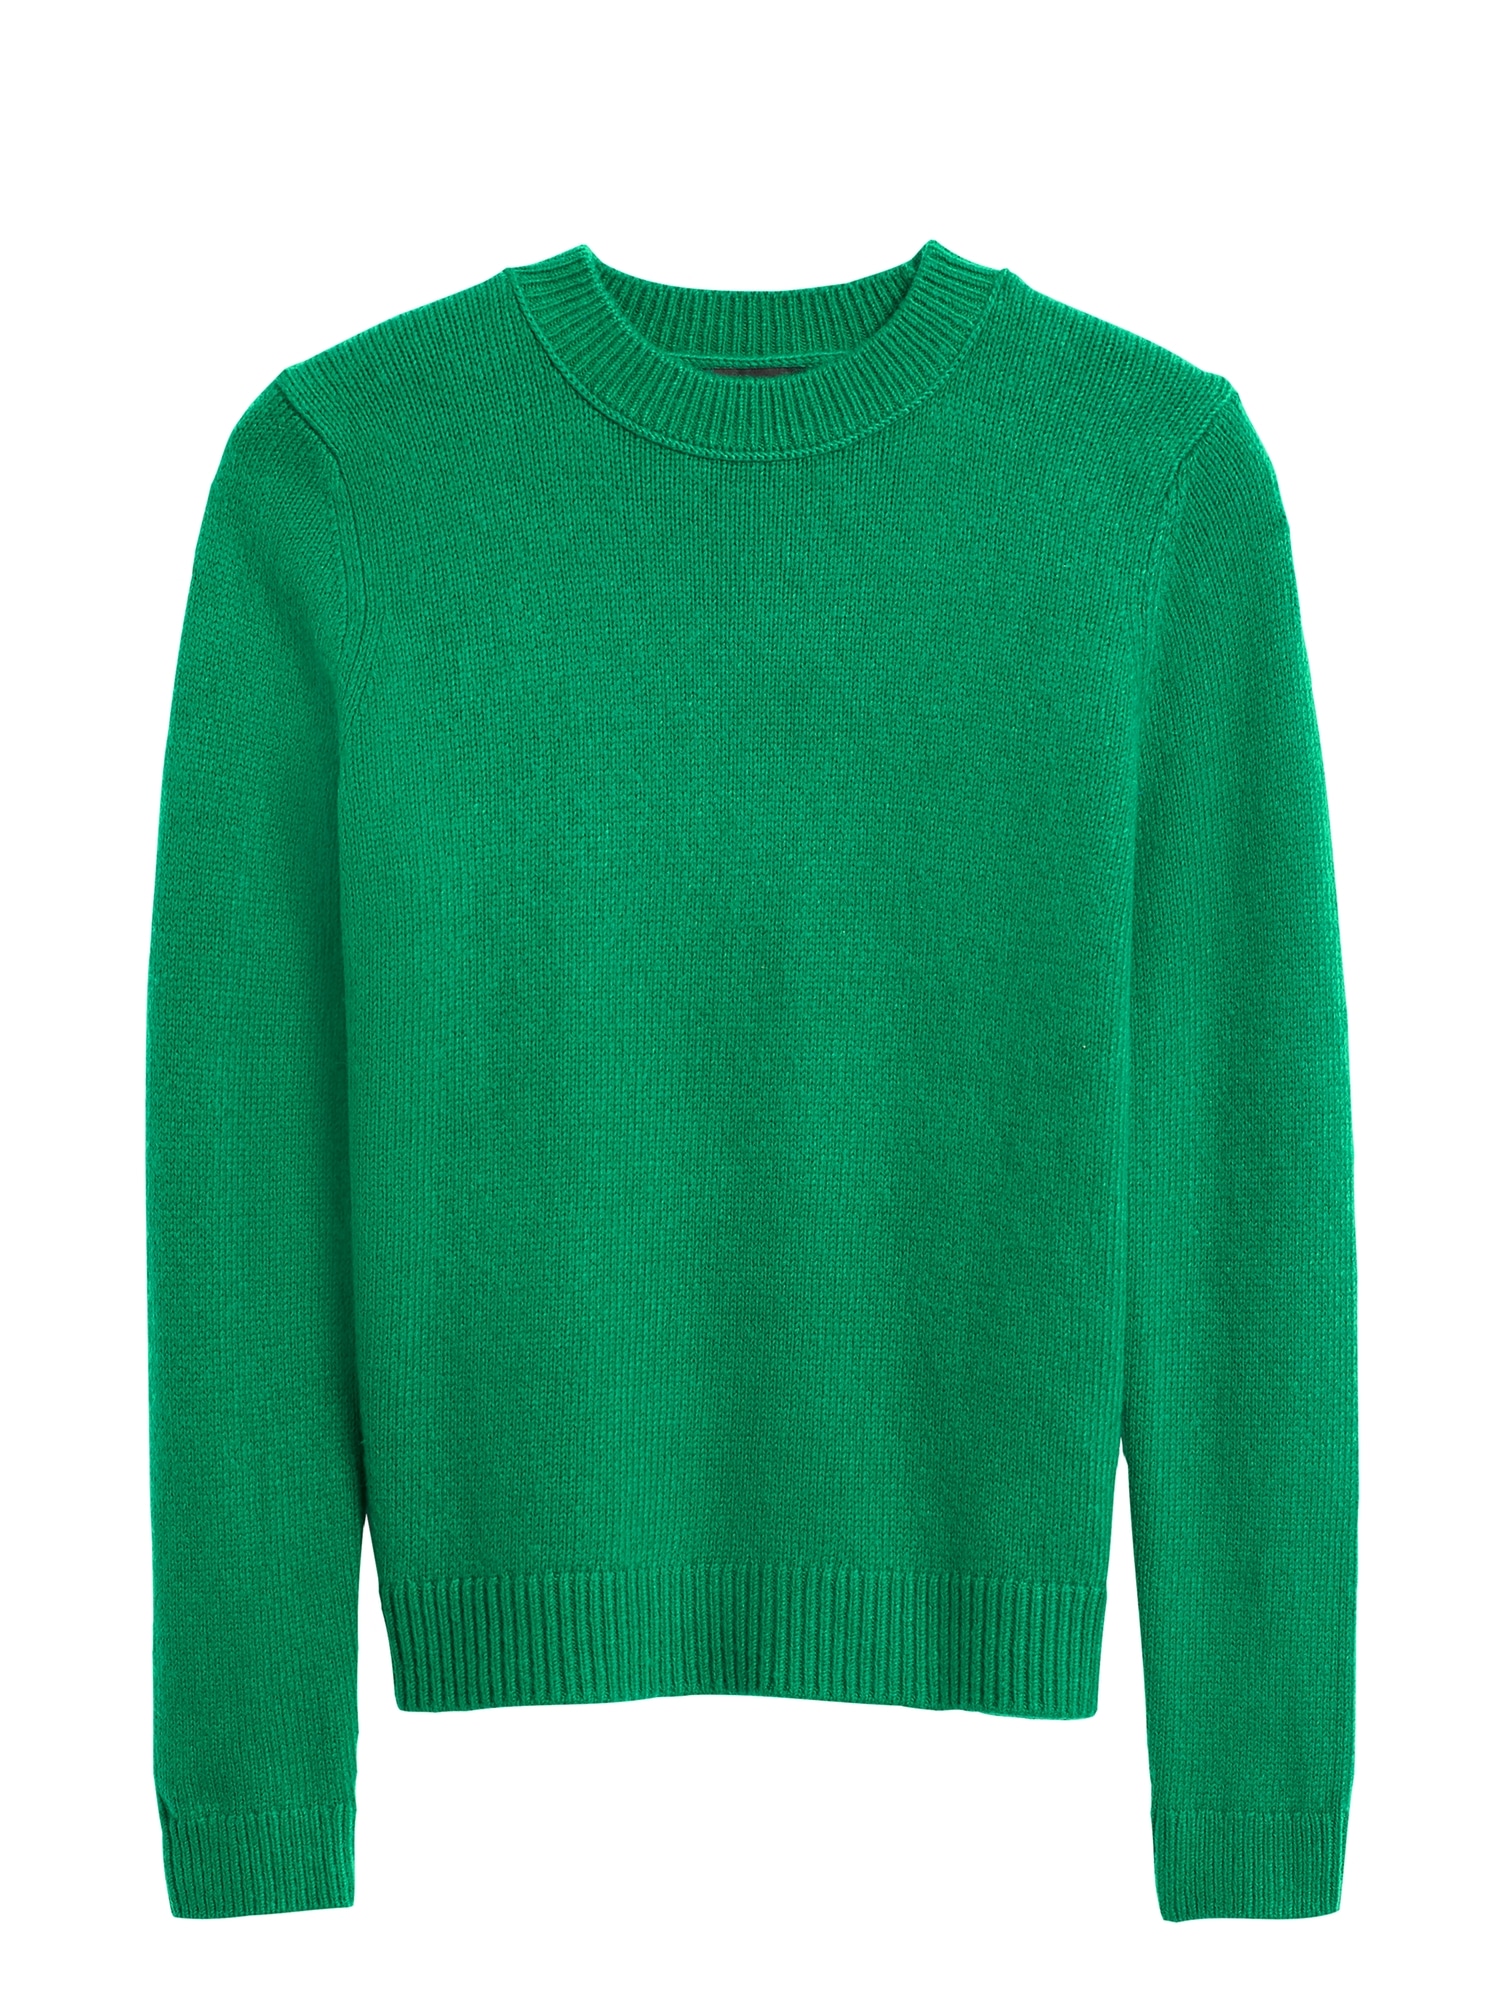 Cotton-Blend Crew-Neck Sweater